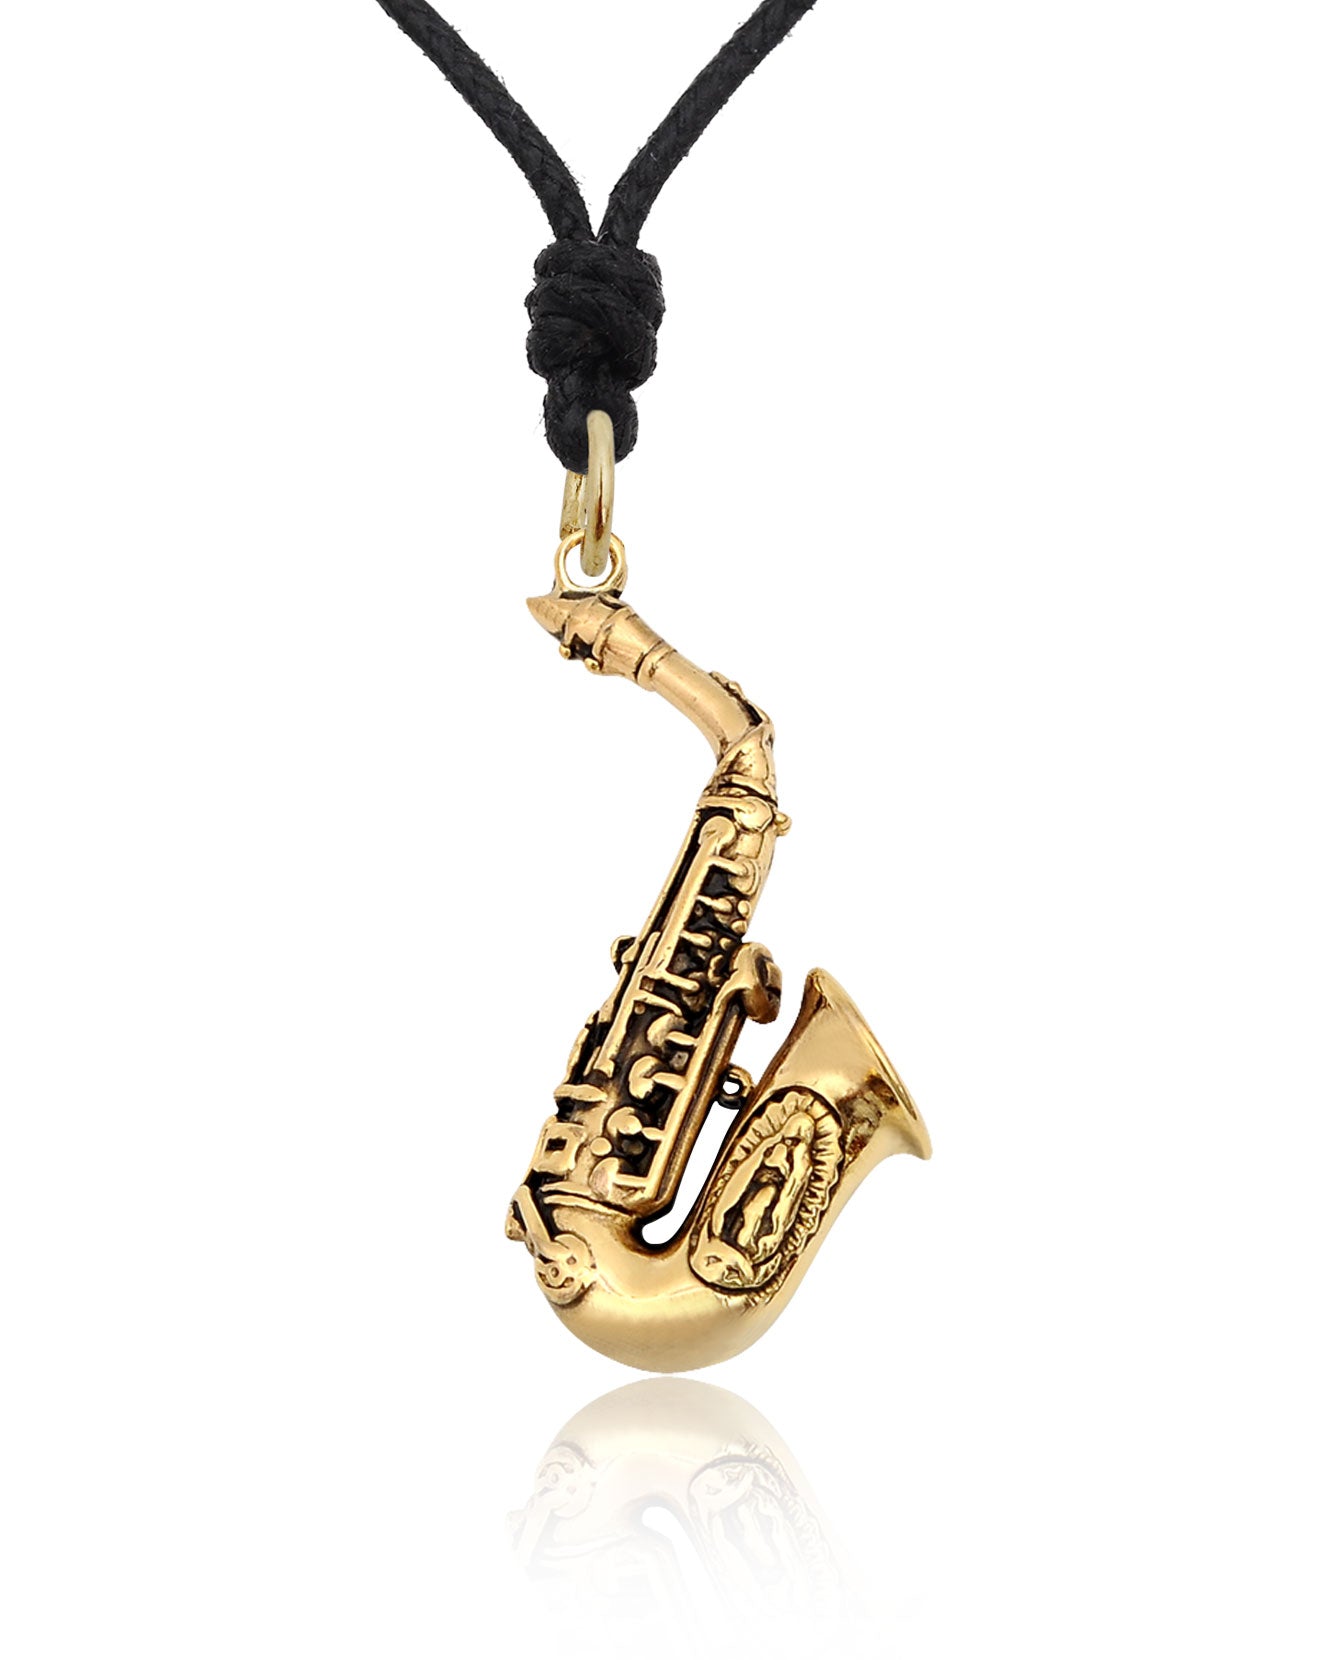 Saxaphone Music Instrument Handmade Brass Necklace Pendant Jewelry With Cotton Cord